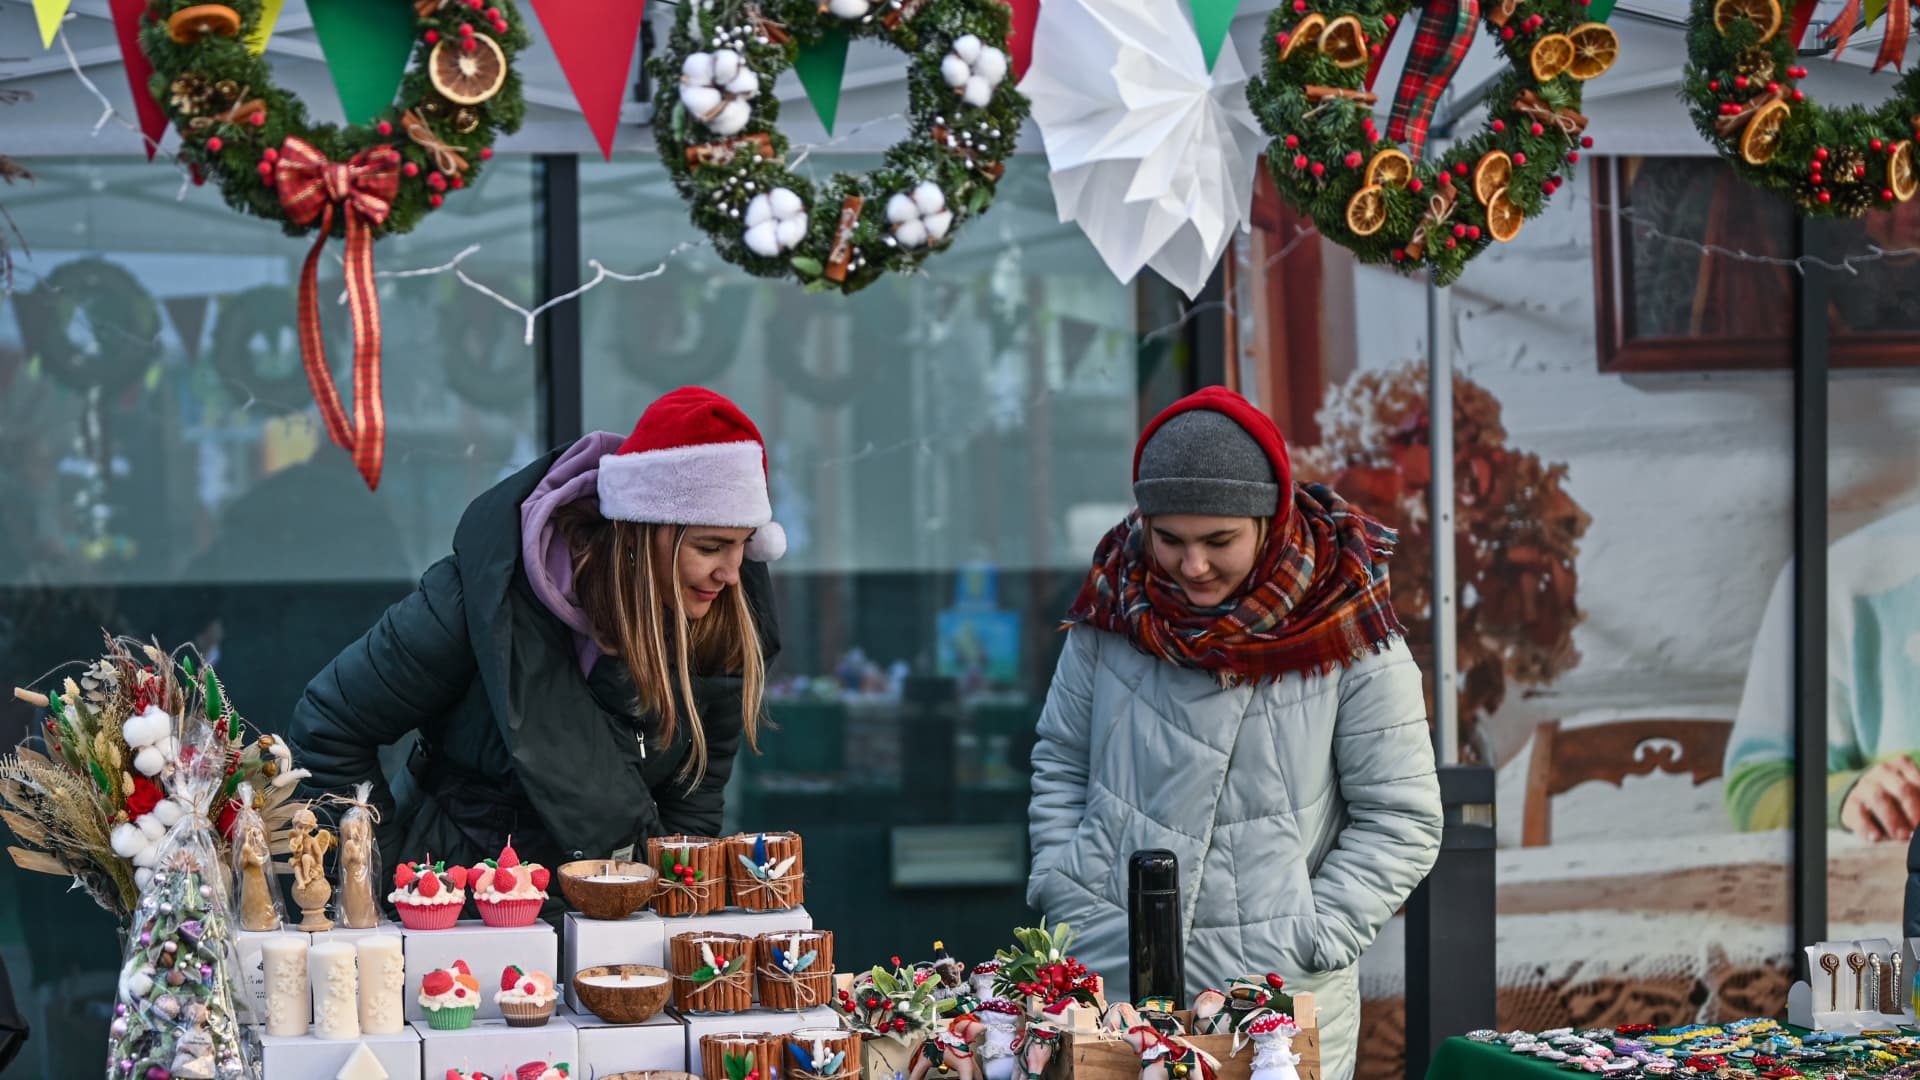 A stall at the Ukrainian Christmas market in Krakow, Poland.